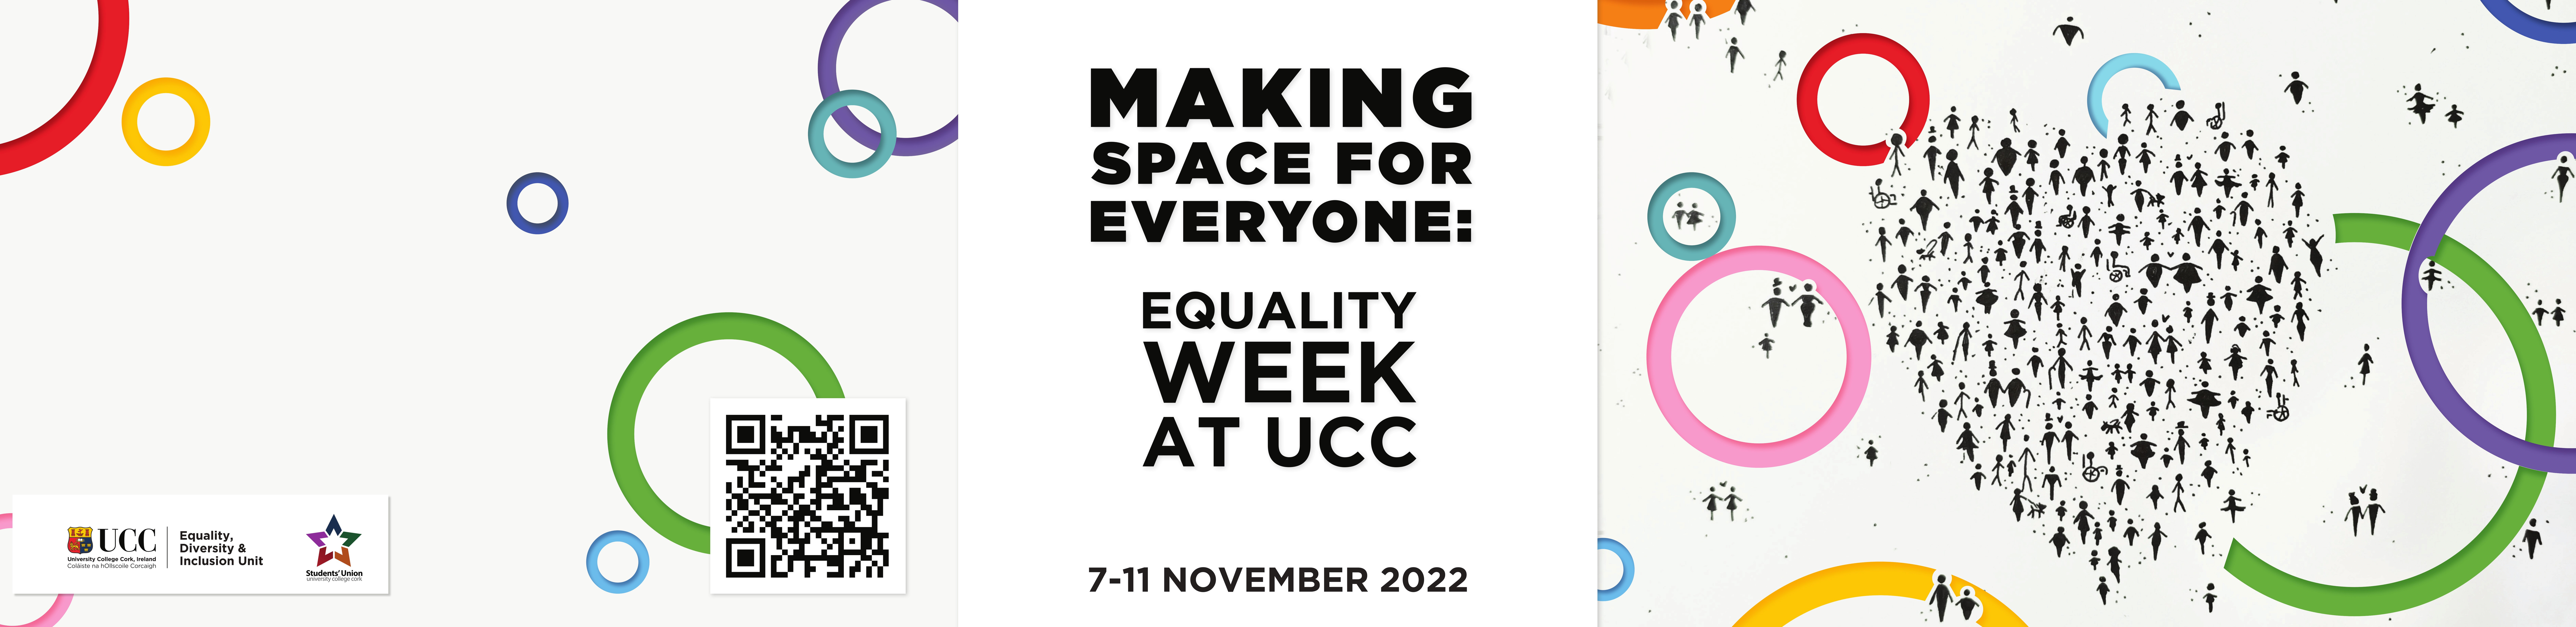 Equality Week 2022 at UCC